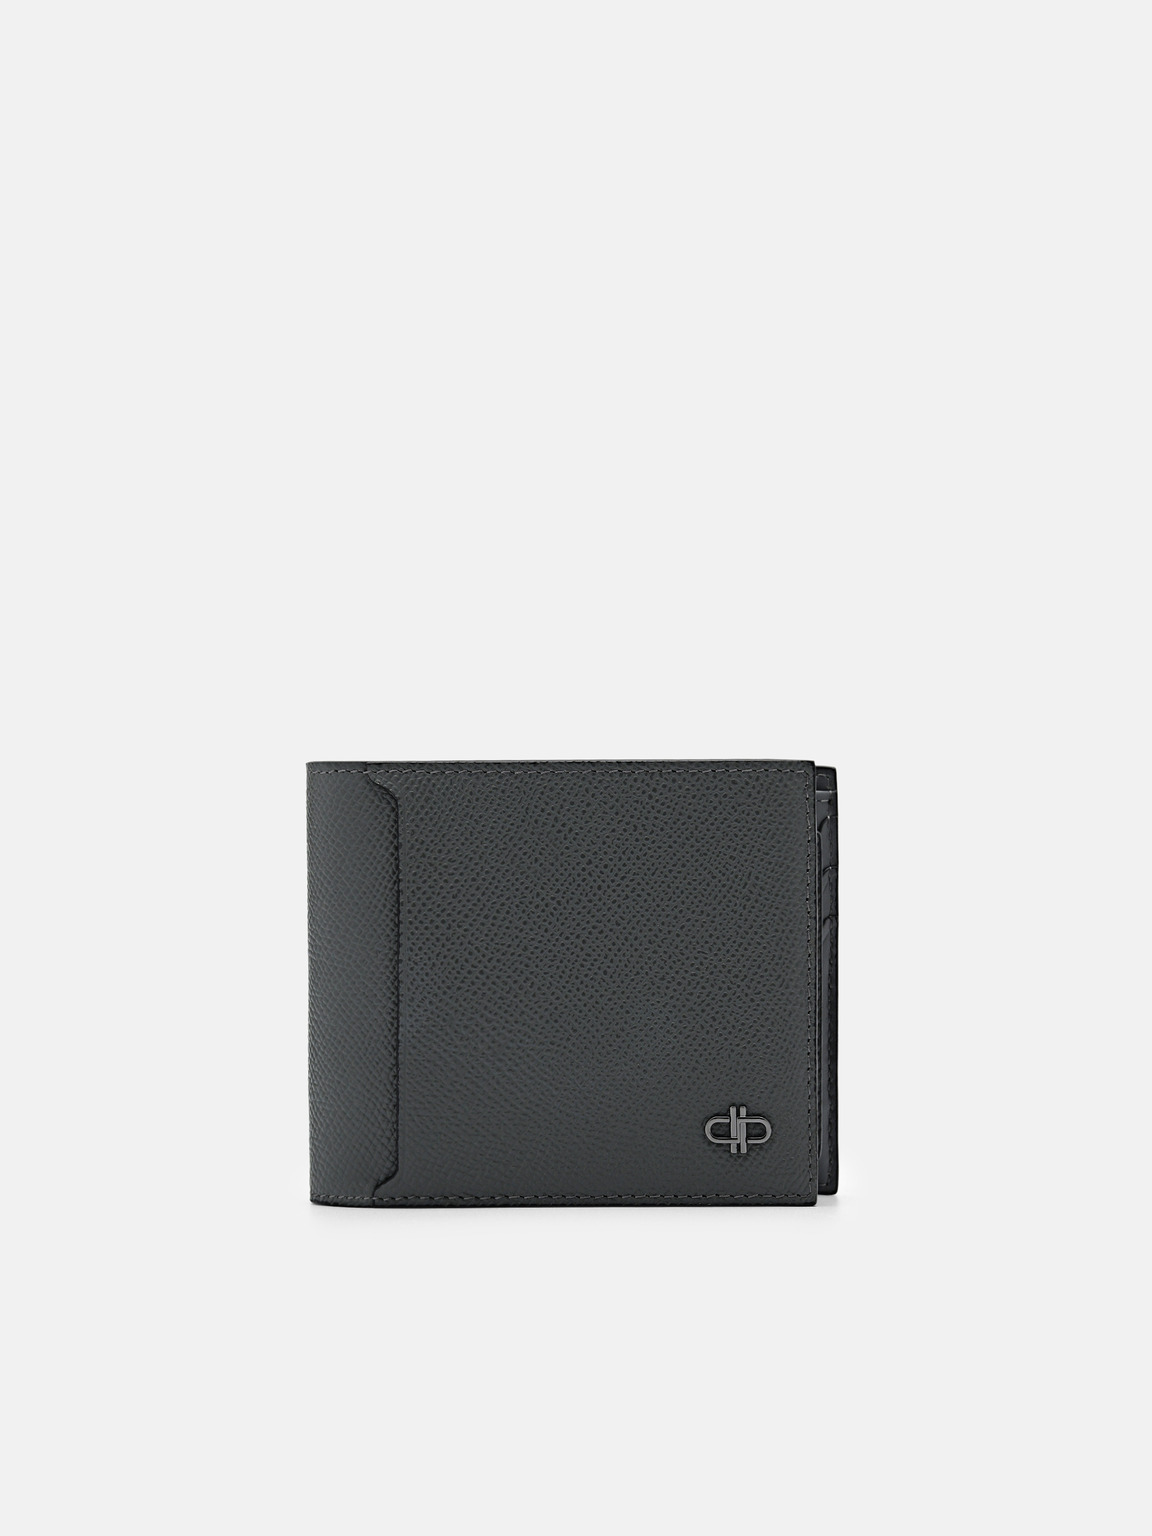 PEDRO Icon Leather Bi-Fold Wallet with Insert, Dark Grey